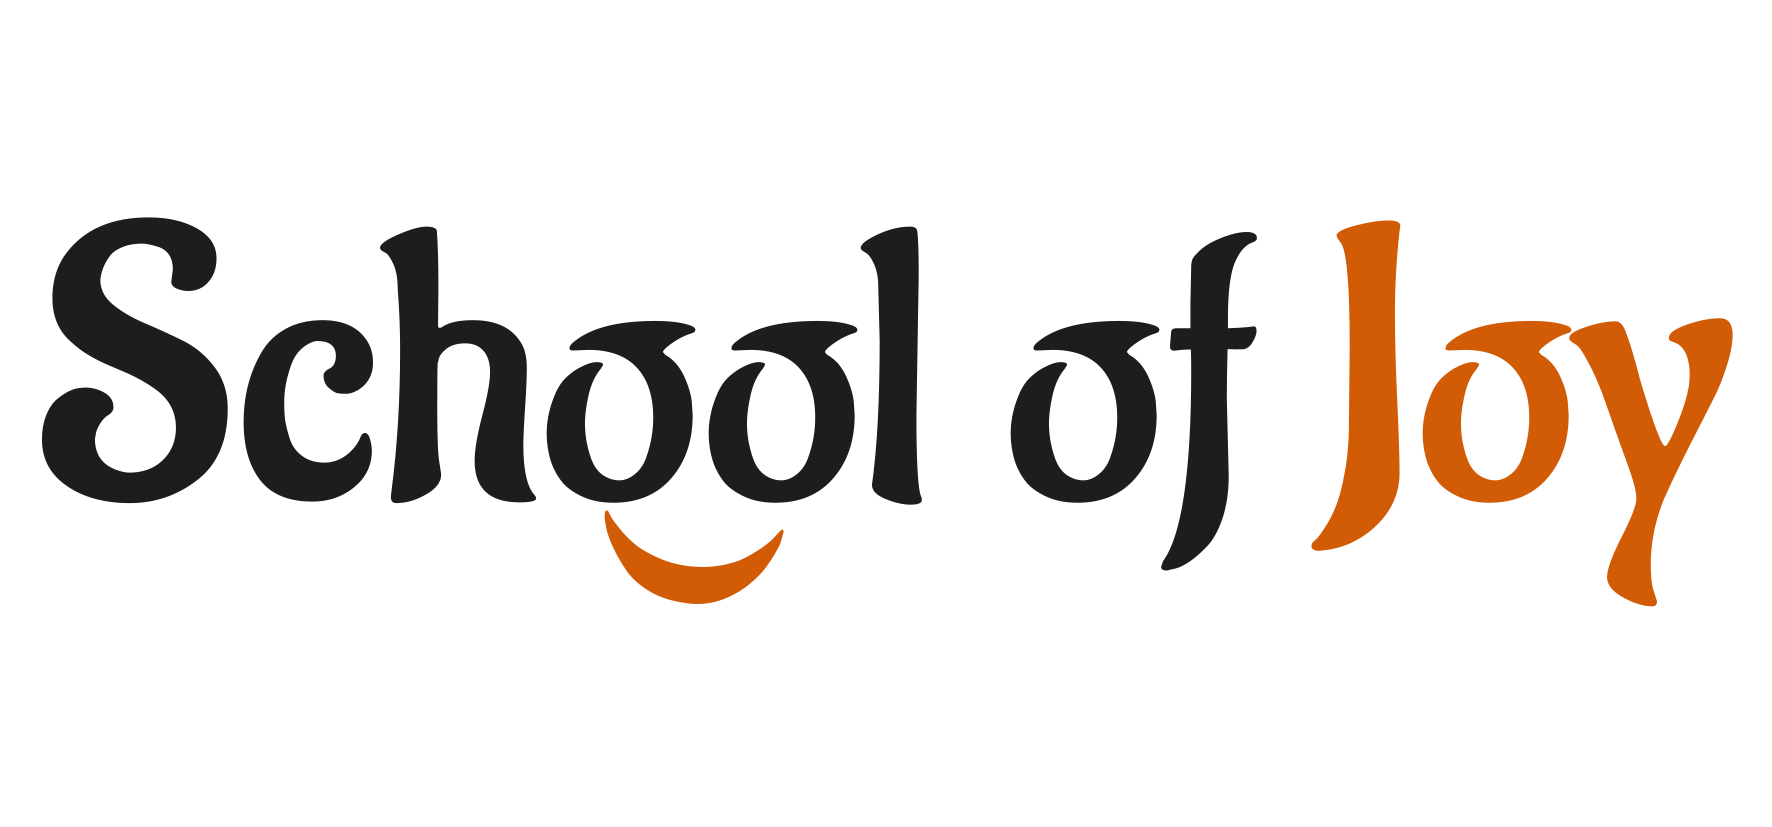 School of Joy